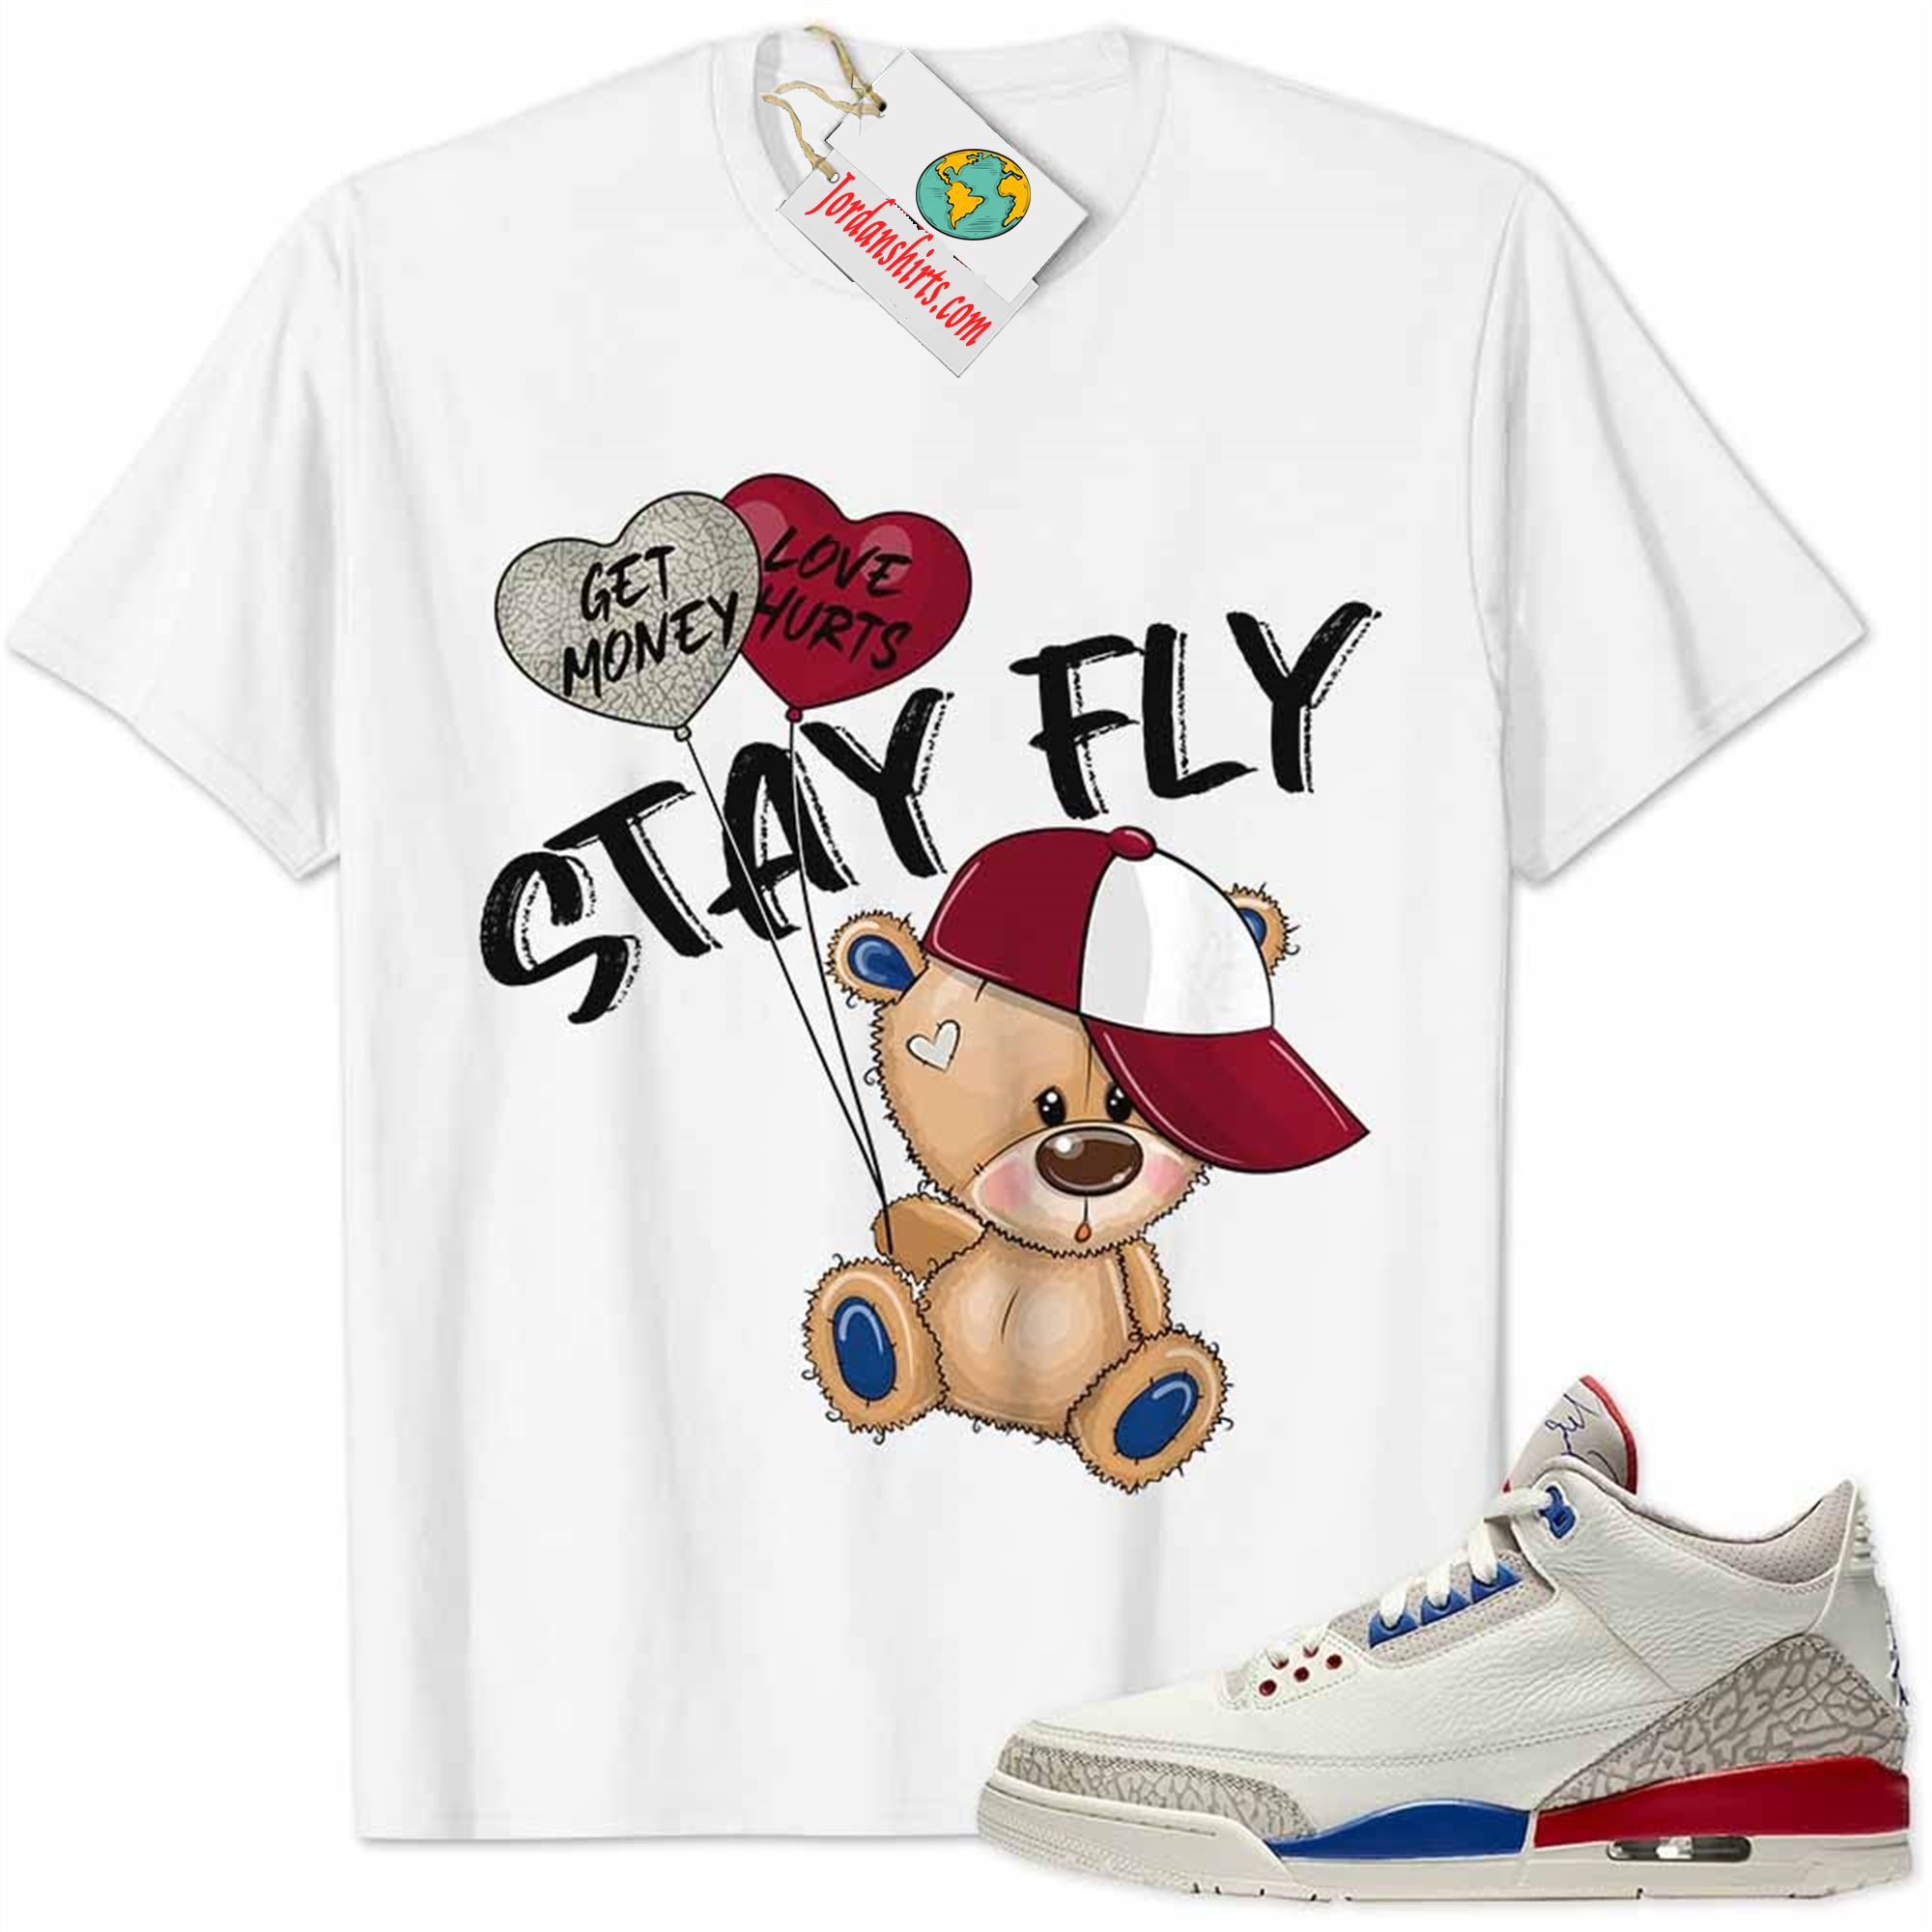 Jordan 3 Shirt, International Flight Charity Game 3s Shirt Cute Teddy Bear Stay Fly Get Money White Plus Size Up To 5xl